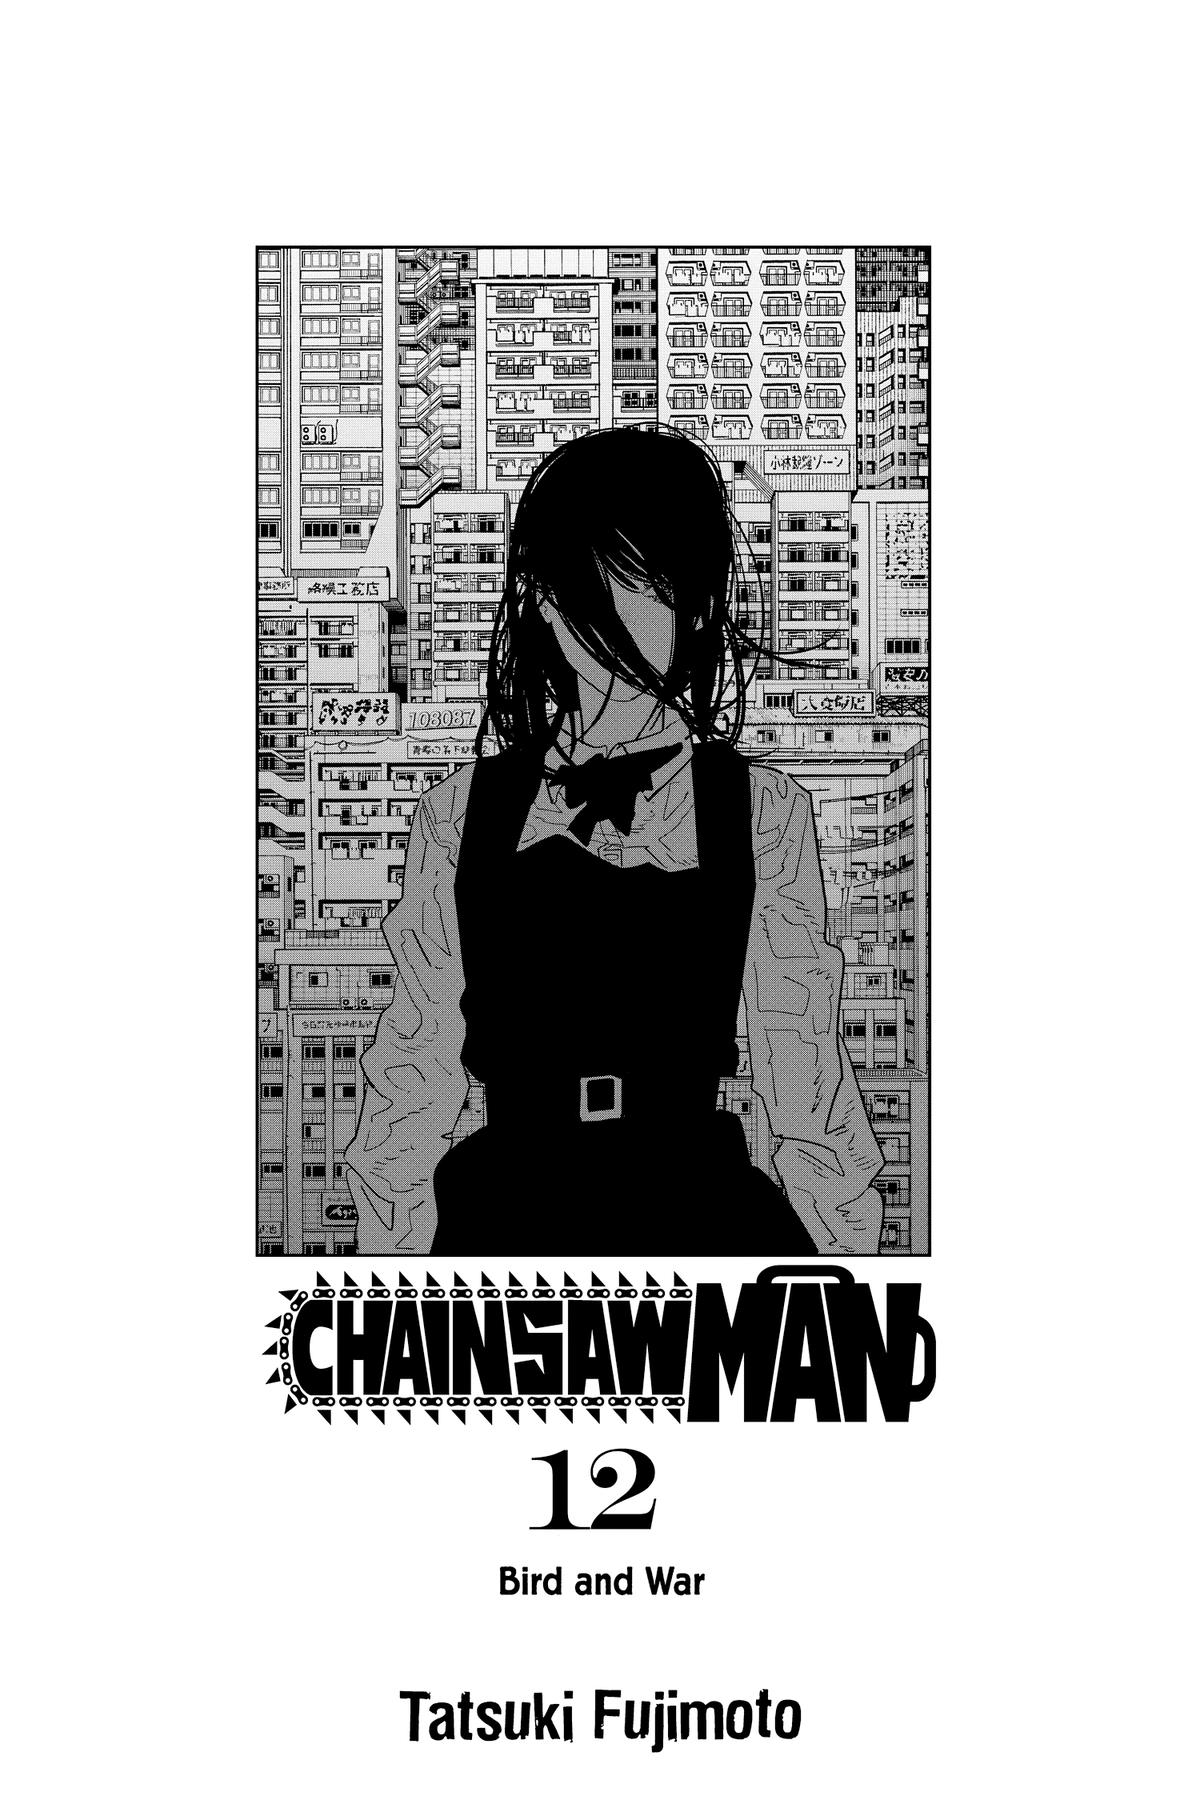 Chainsaw Man Vol. 2 by Tatsuki Fujimoto (2020) Brand New 🚚 Ships Today 🚚